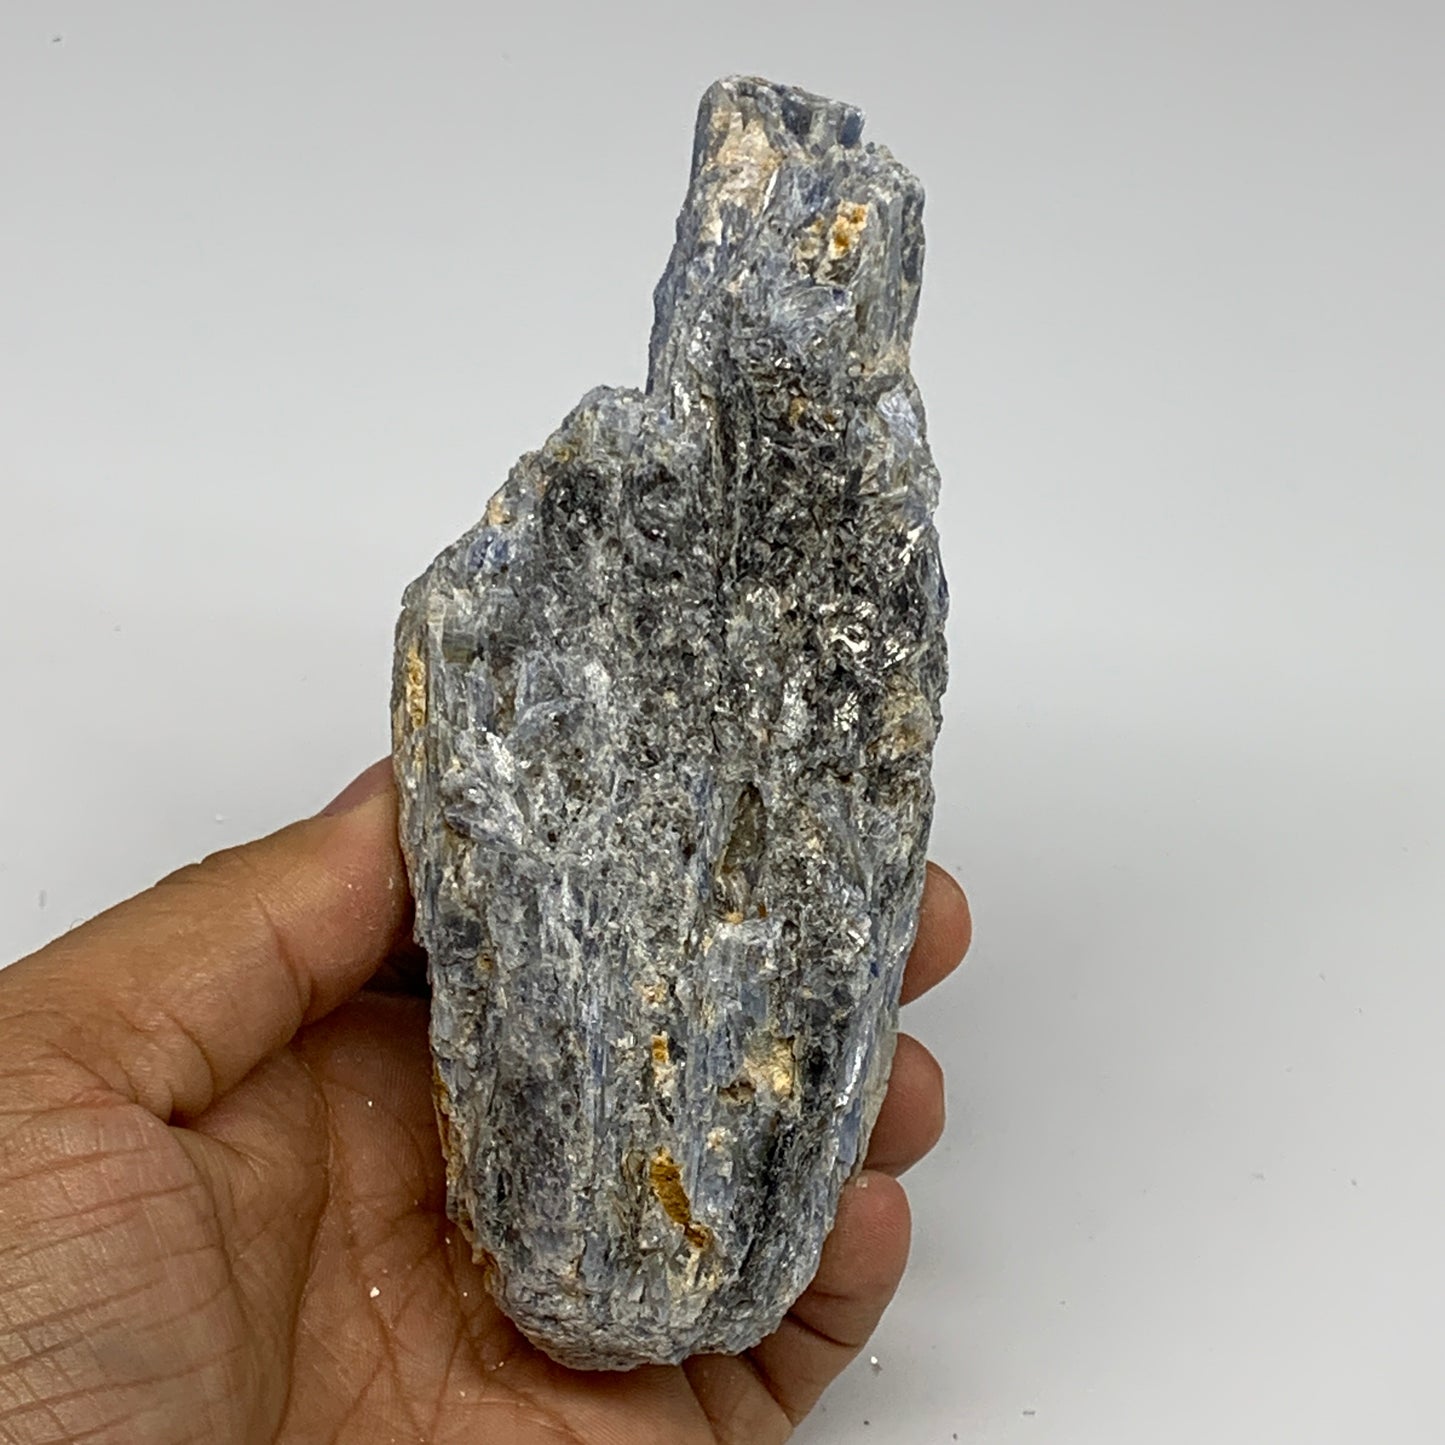 493.2g, 5.1"x2.2"x2.1", Rough Raw Blue Kyanite Chunk Mineral @Brazil, B28771